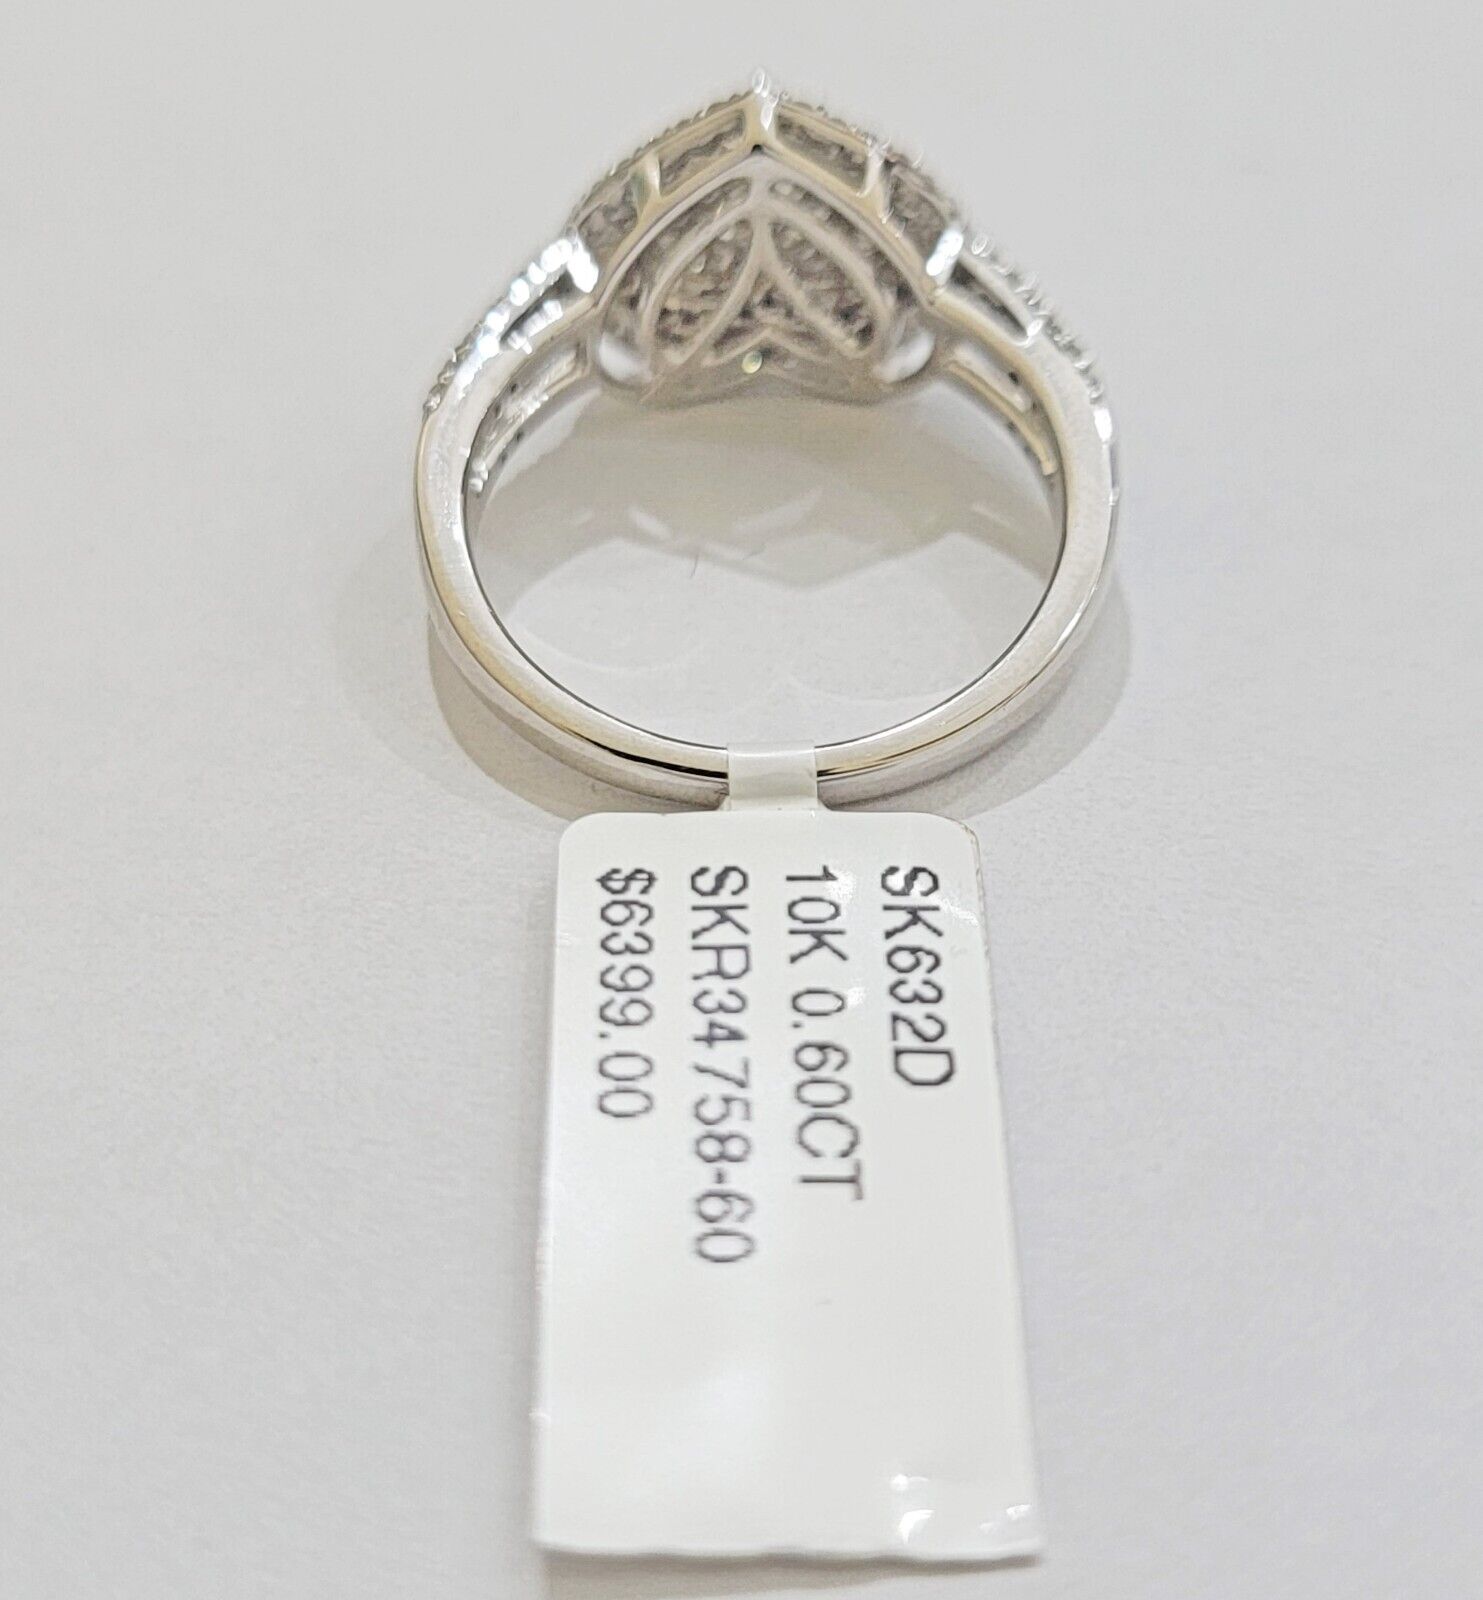 Real Diamond Ring Heart Shape 10k White Gold 0.60 Ct Natural Diamond Ladies Band